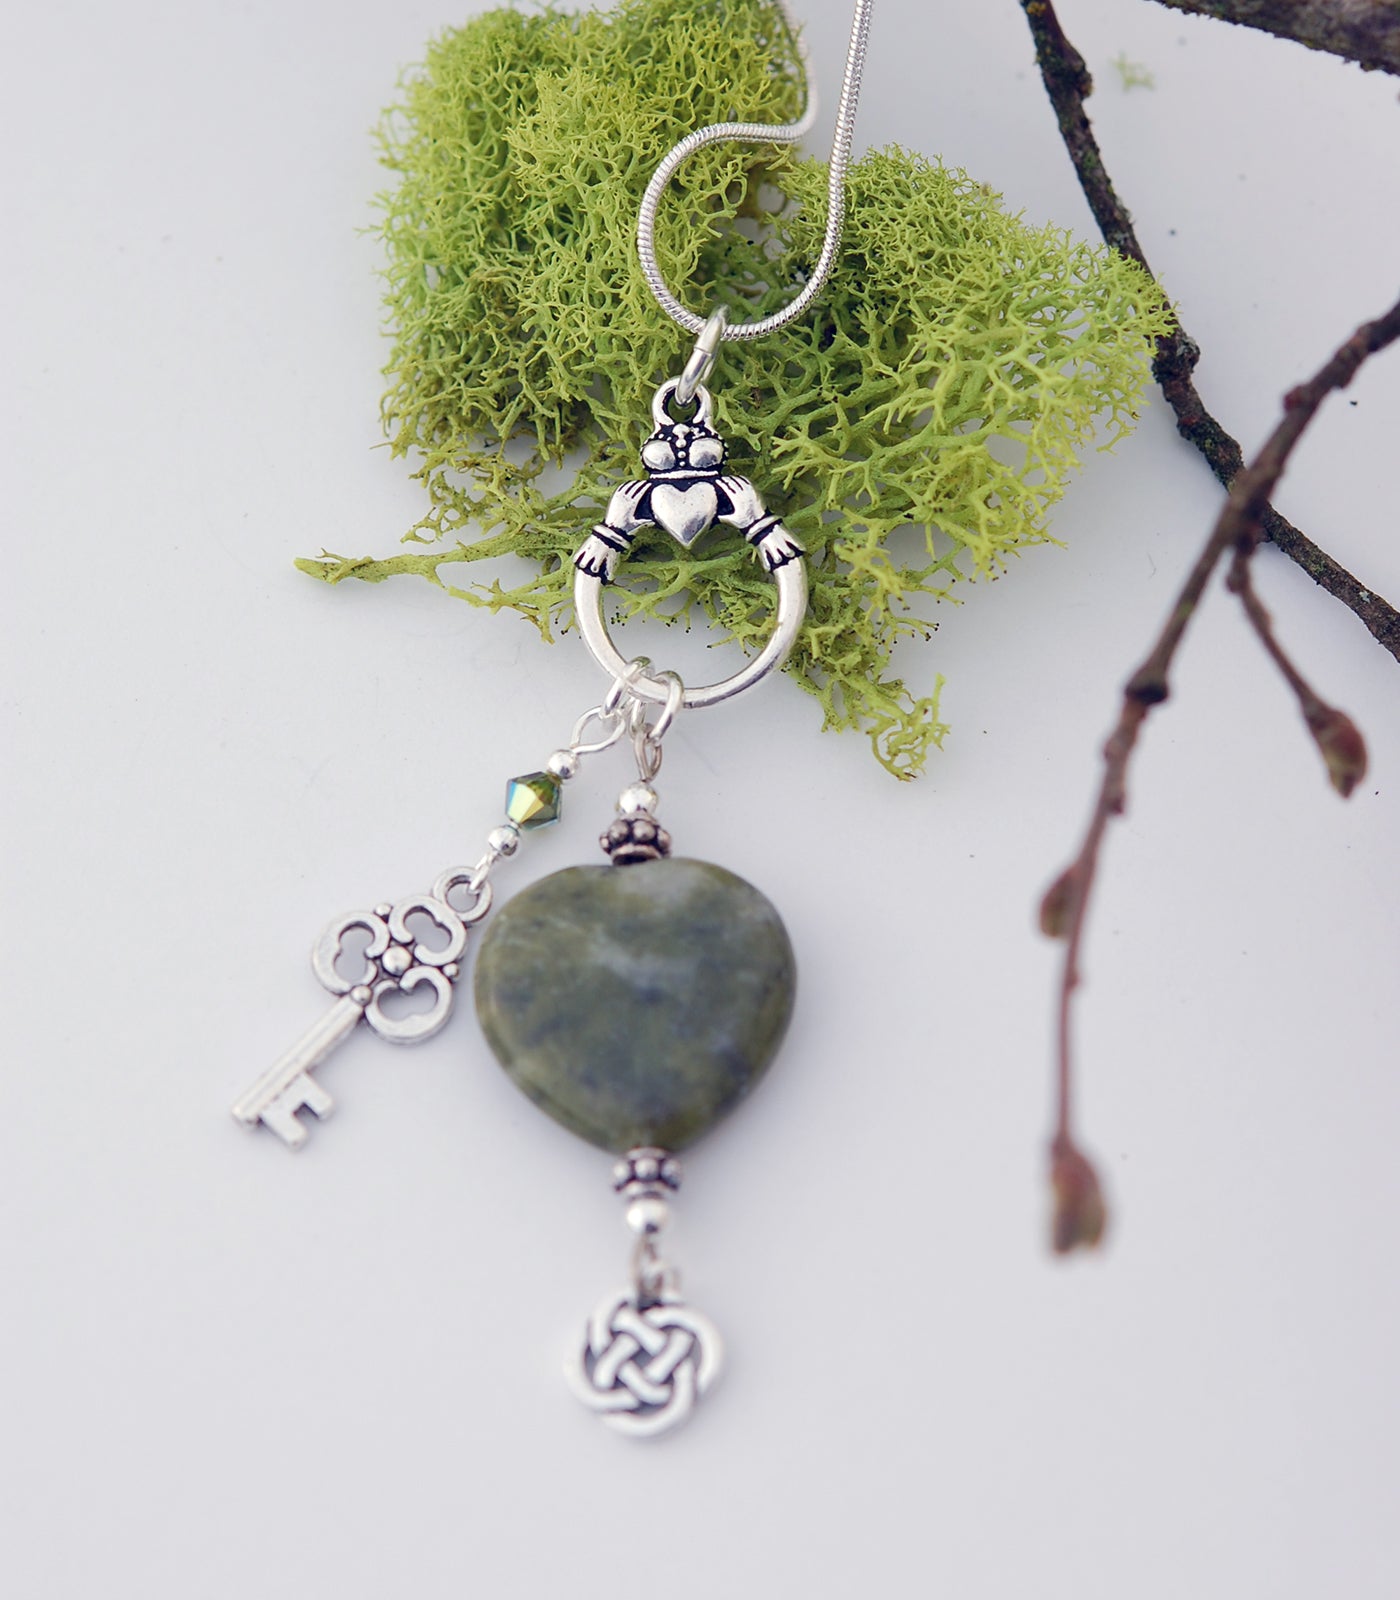 Connemara Marble Heart Pendant with Claddagh